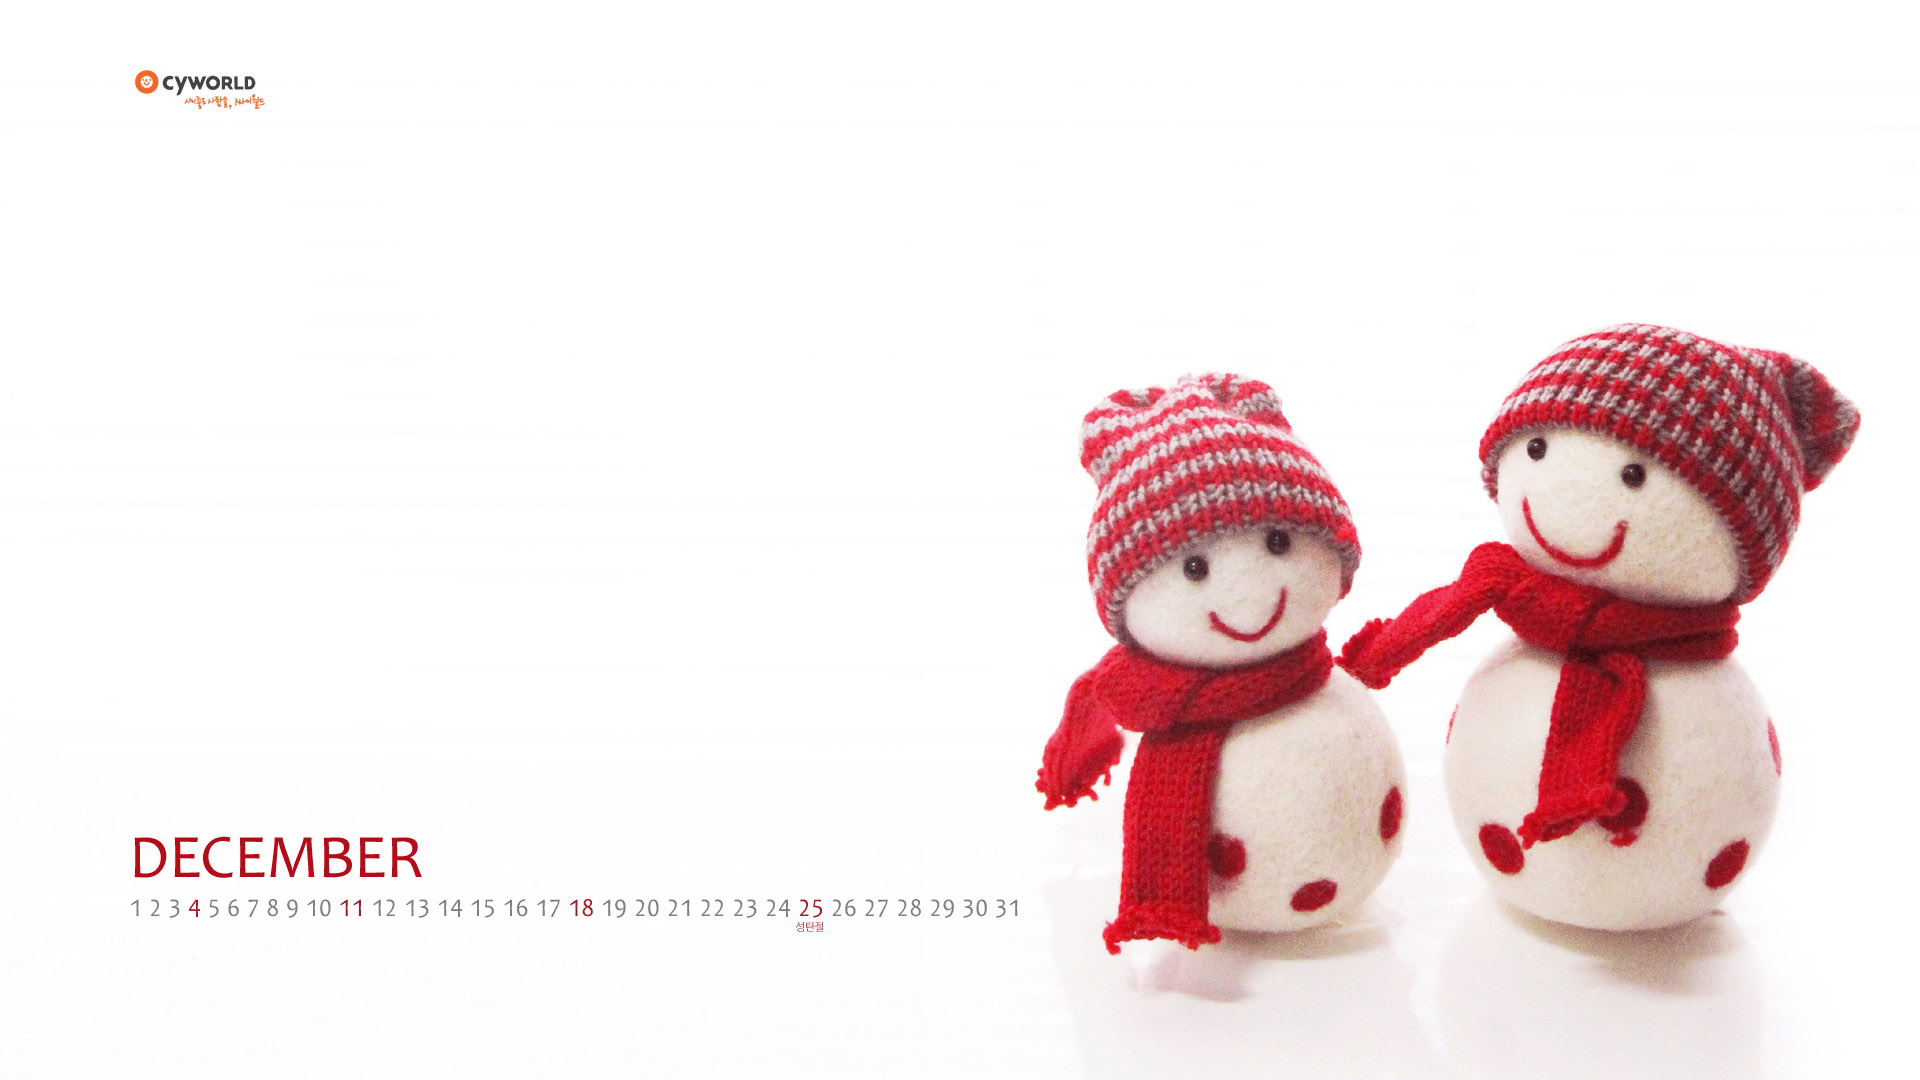 Cute Christmas snowman cyworld December 2011 wallpaper